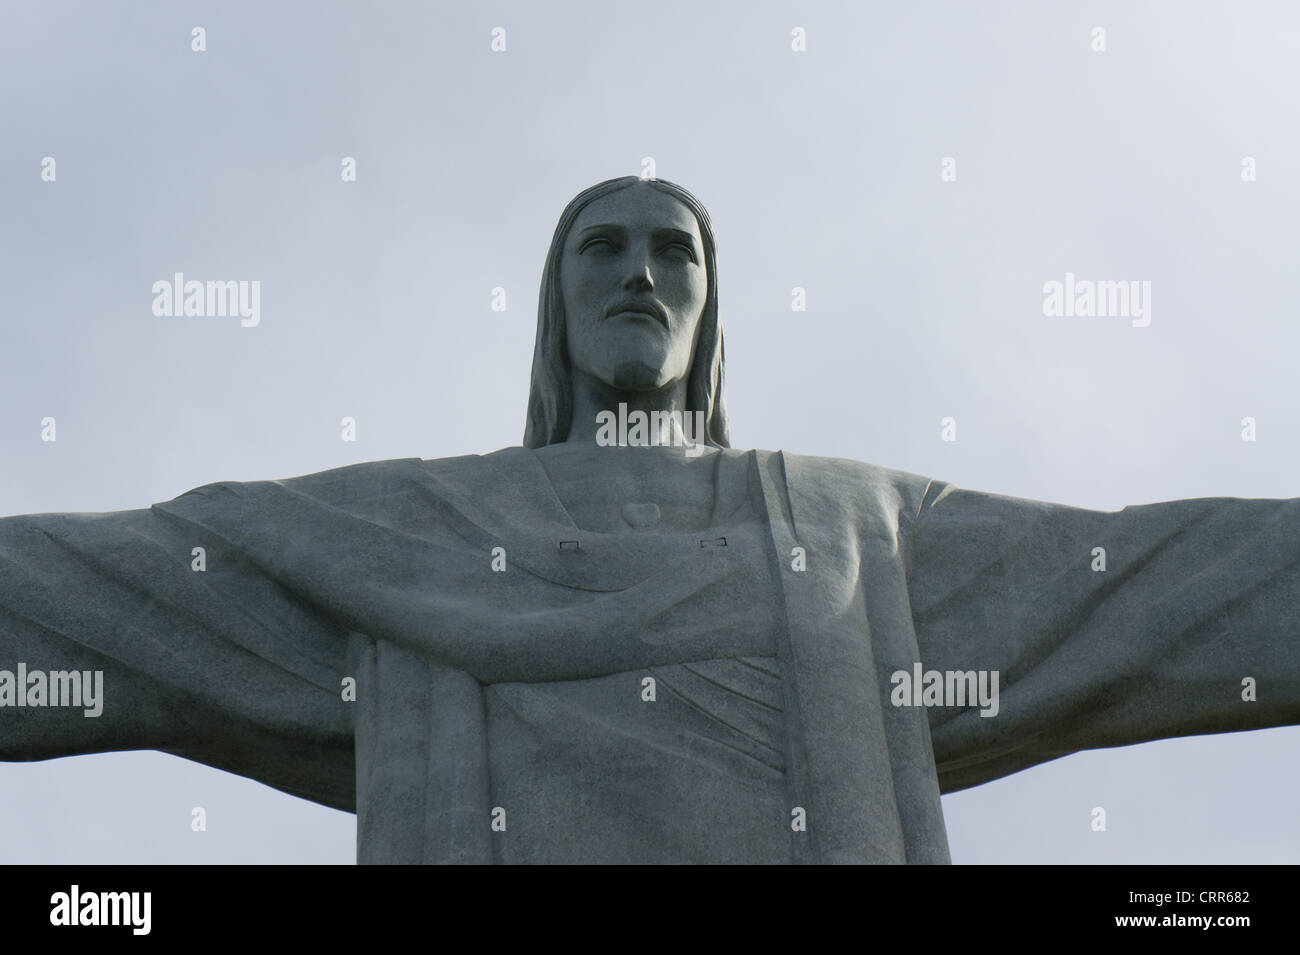 Close-up of the 30 metre tall Art Deco statue Christ the Redeemer (Cristo Redentor) by sculptor Paul Landowski, completed 1931. Rio de Janeiro, Brazil Stock Photo